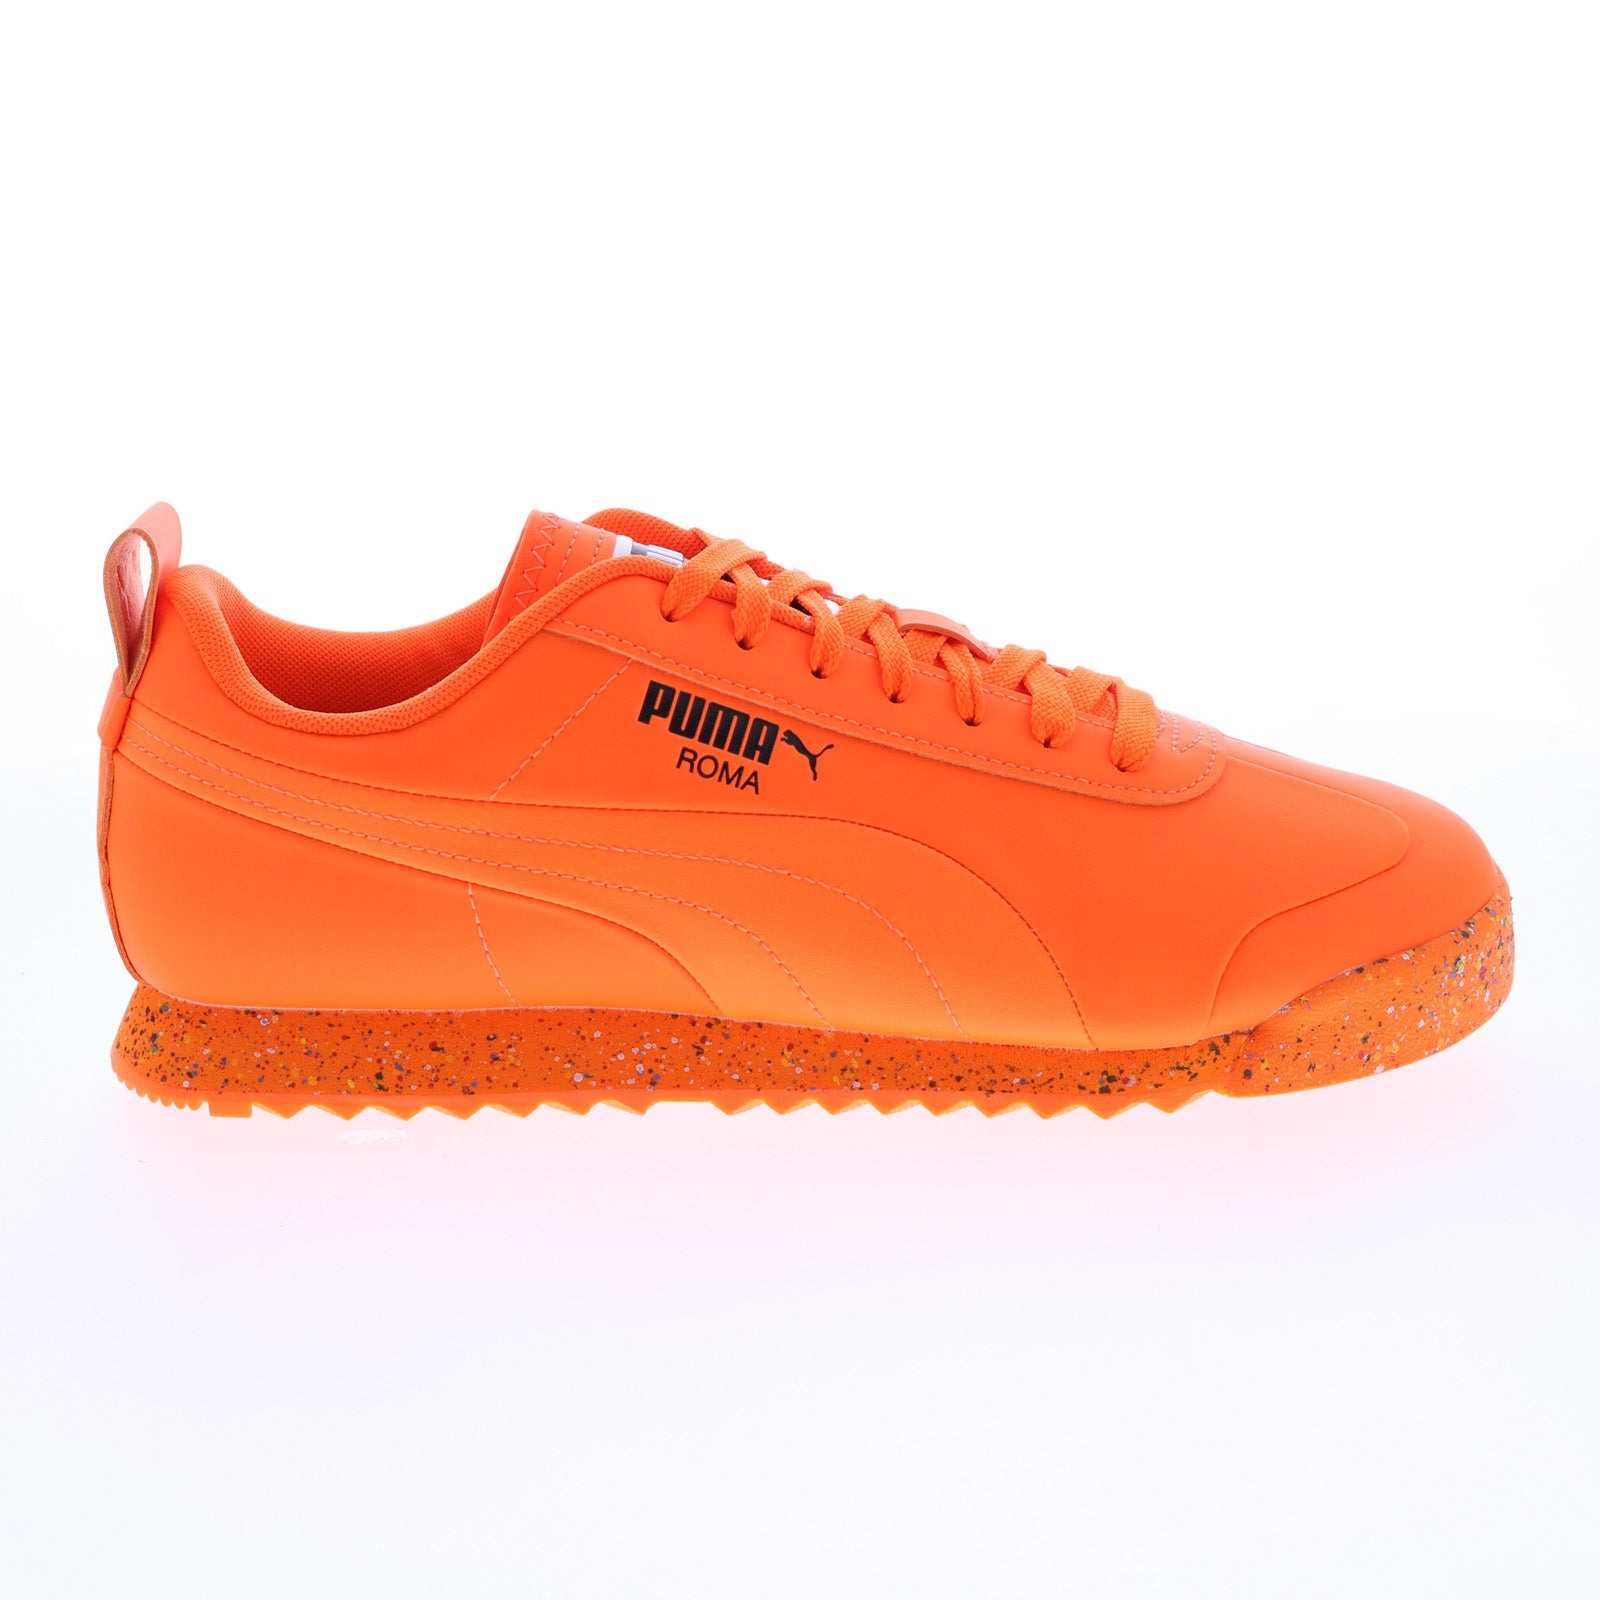 Puma Roma Retro Speckle 38686103 Orange Lifestyle Sneakers Shoes - Shoes